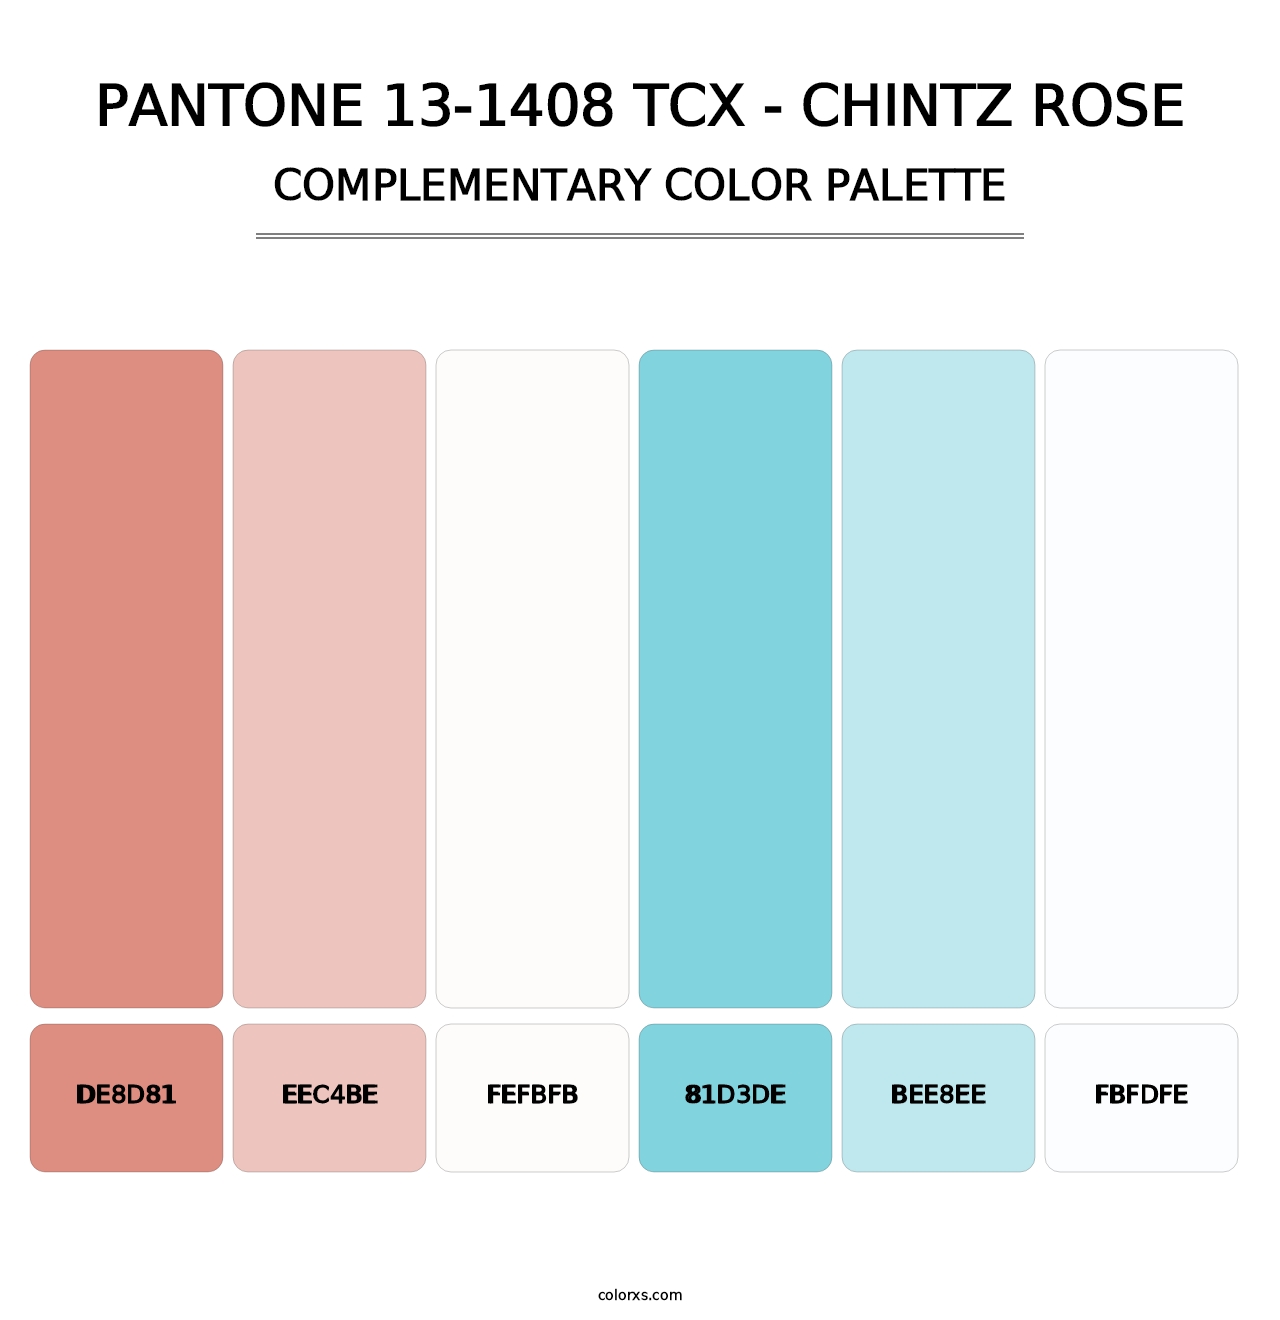 PANTONE 13-1408 TCX - Chintz Rose - Complementary Color Palette